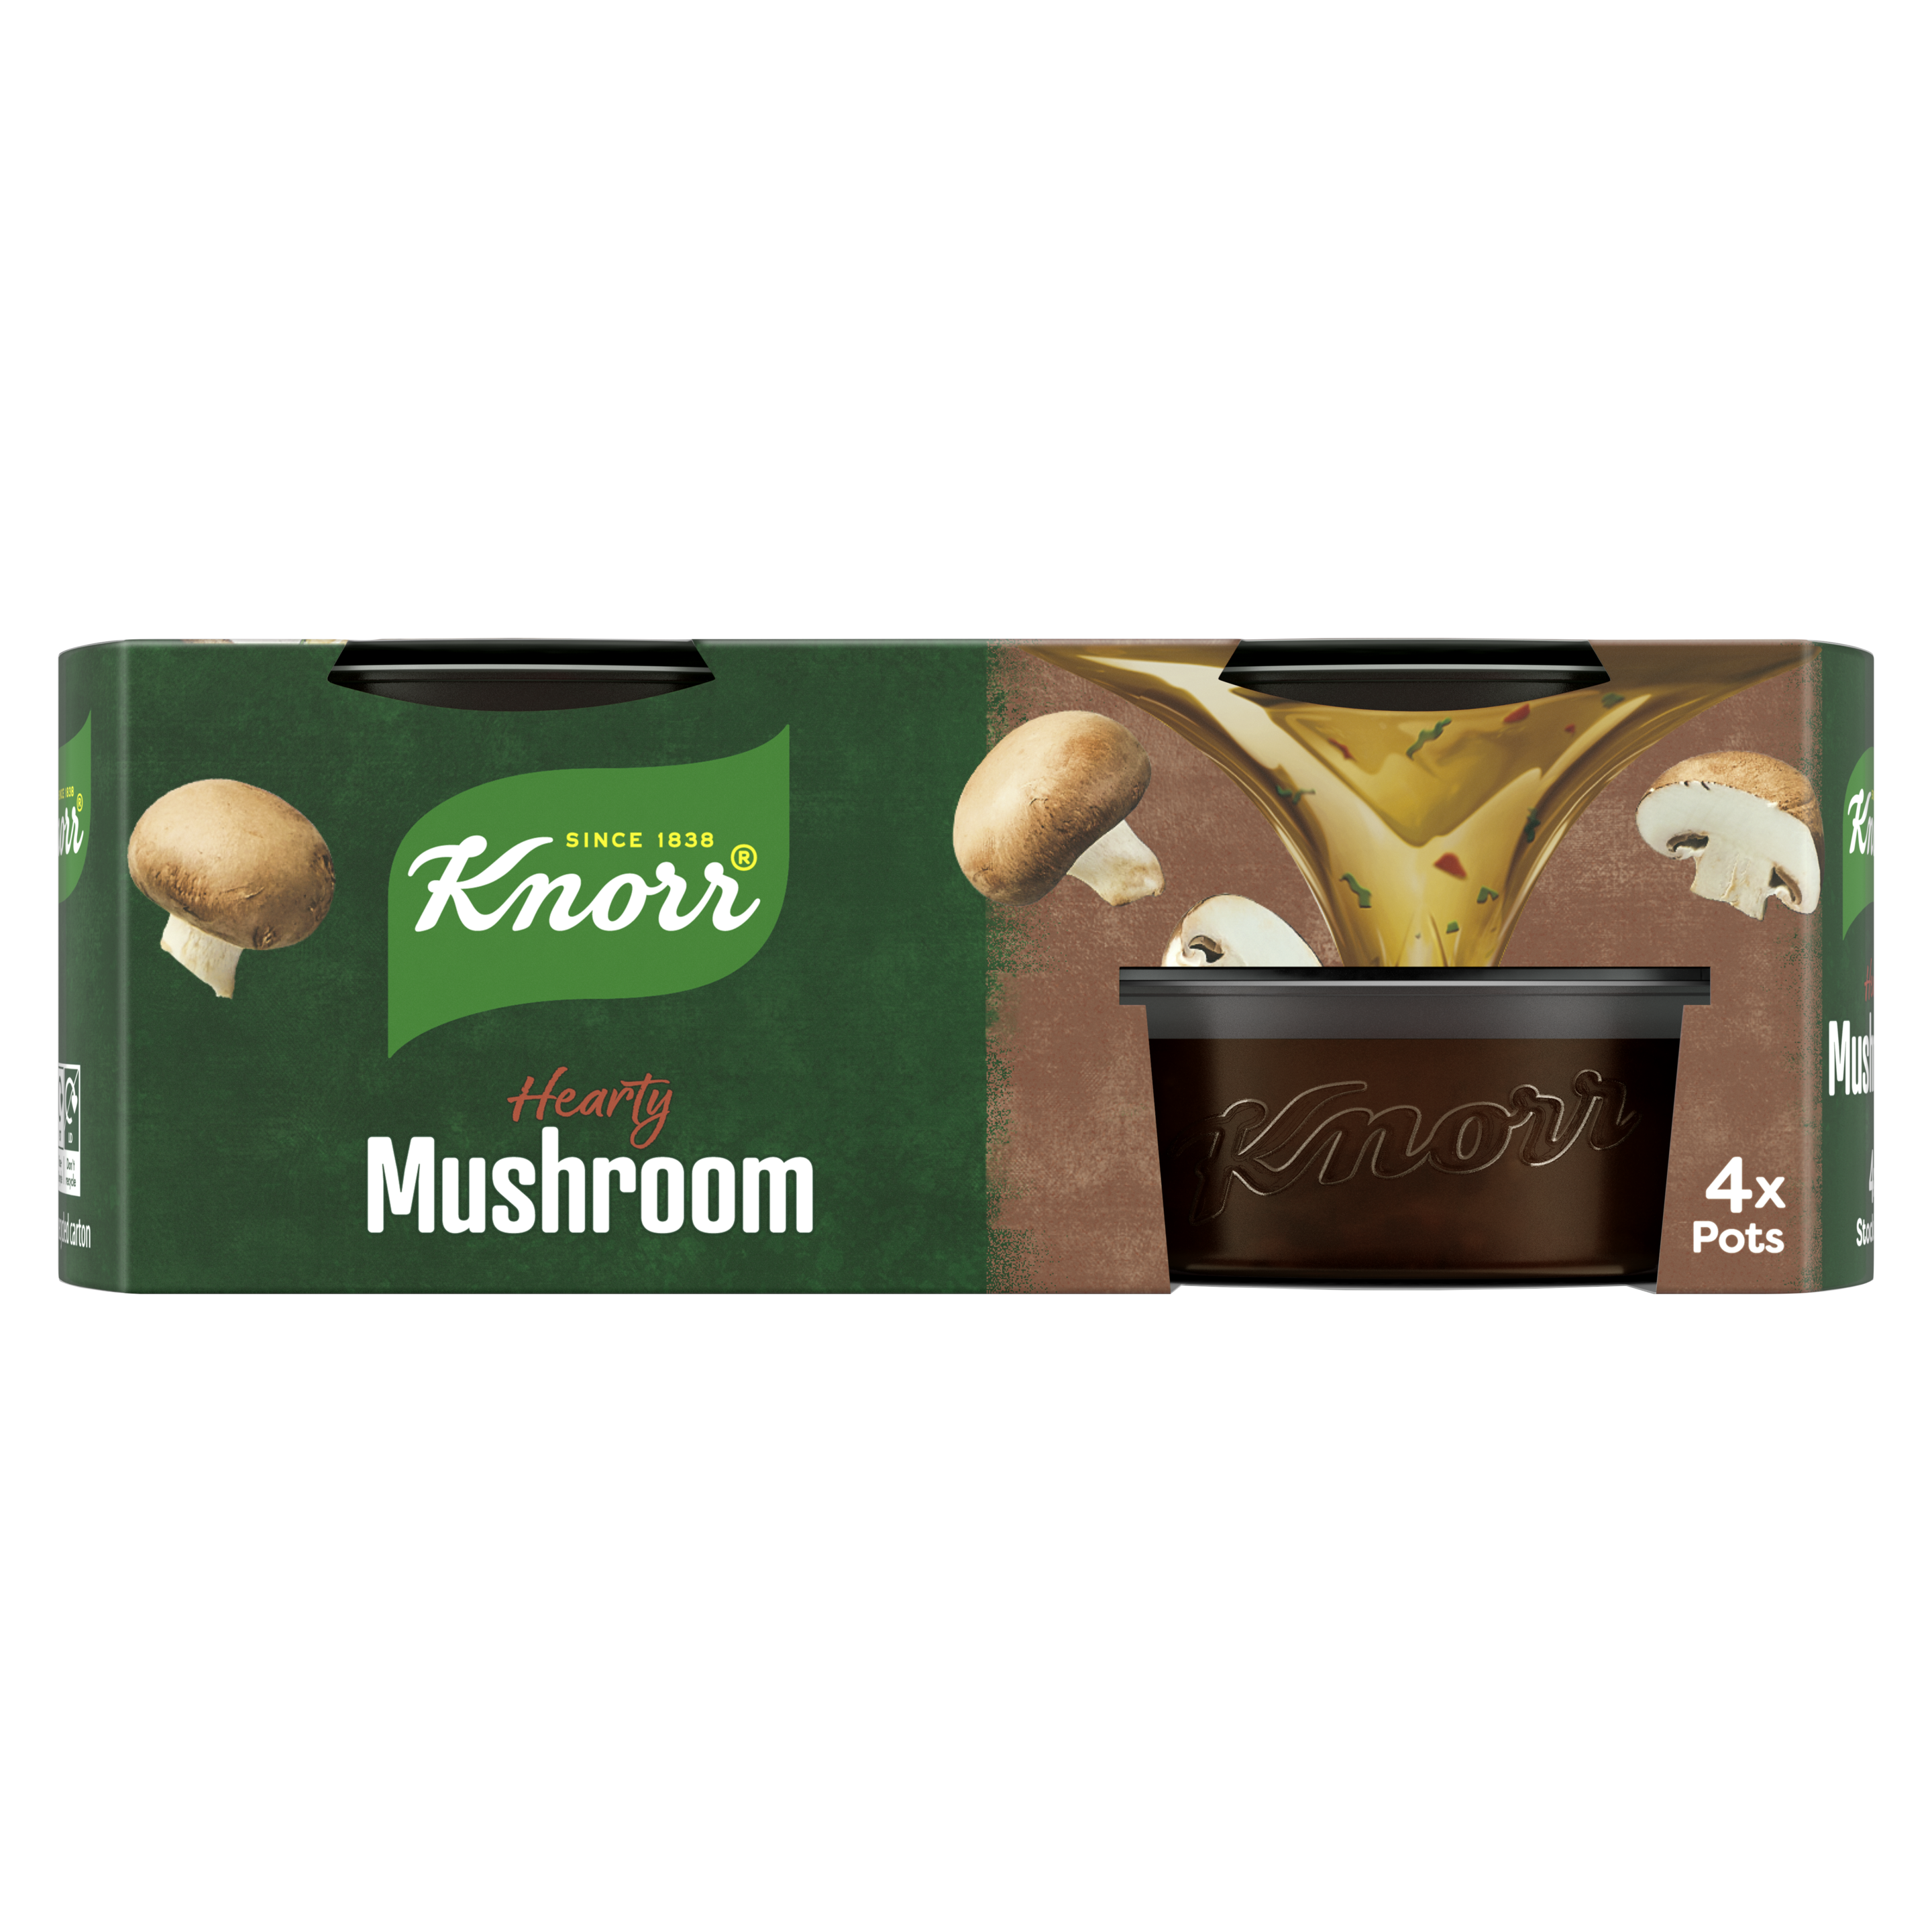 Knorr unveils Mushroom and Lamb Stock Pots